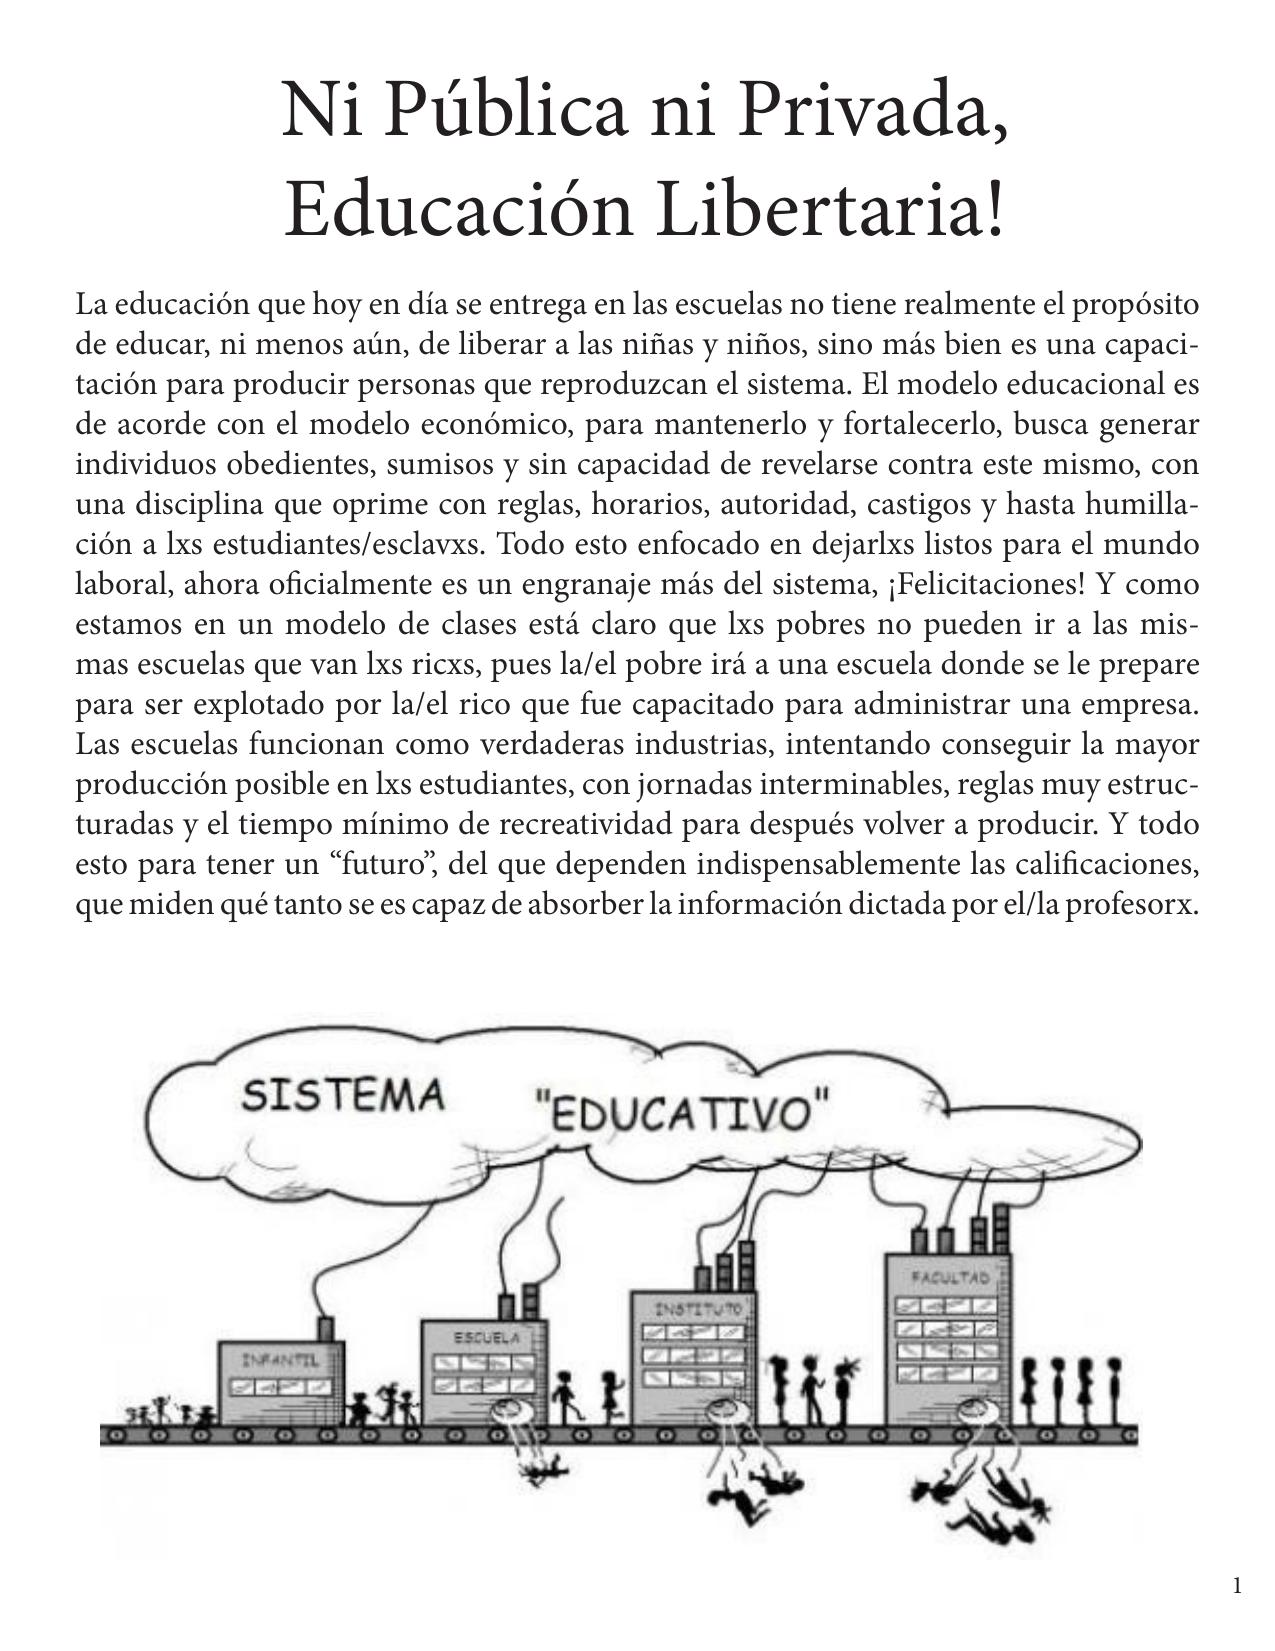 Educacion libertaria